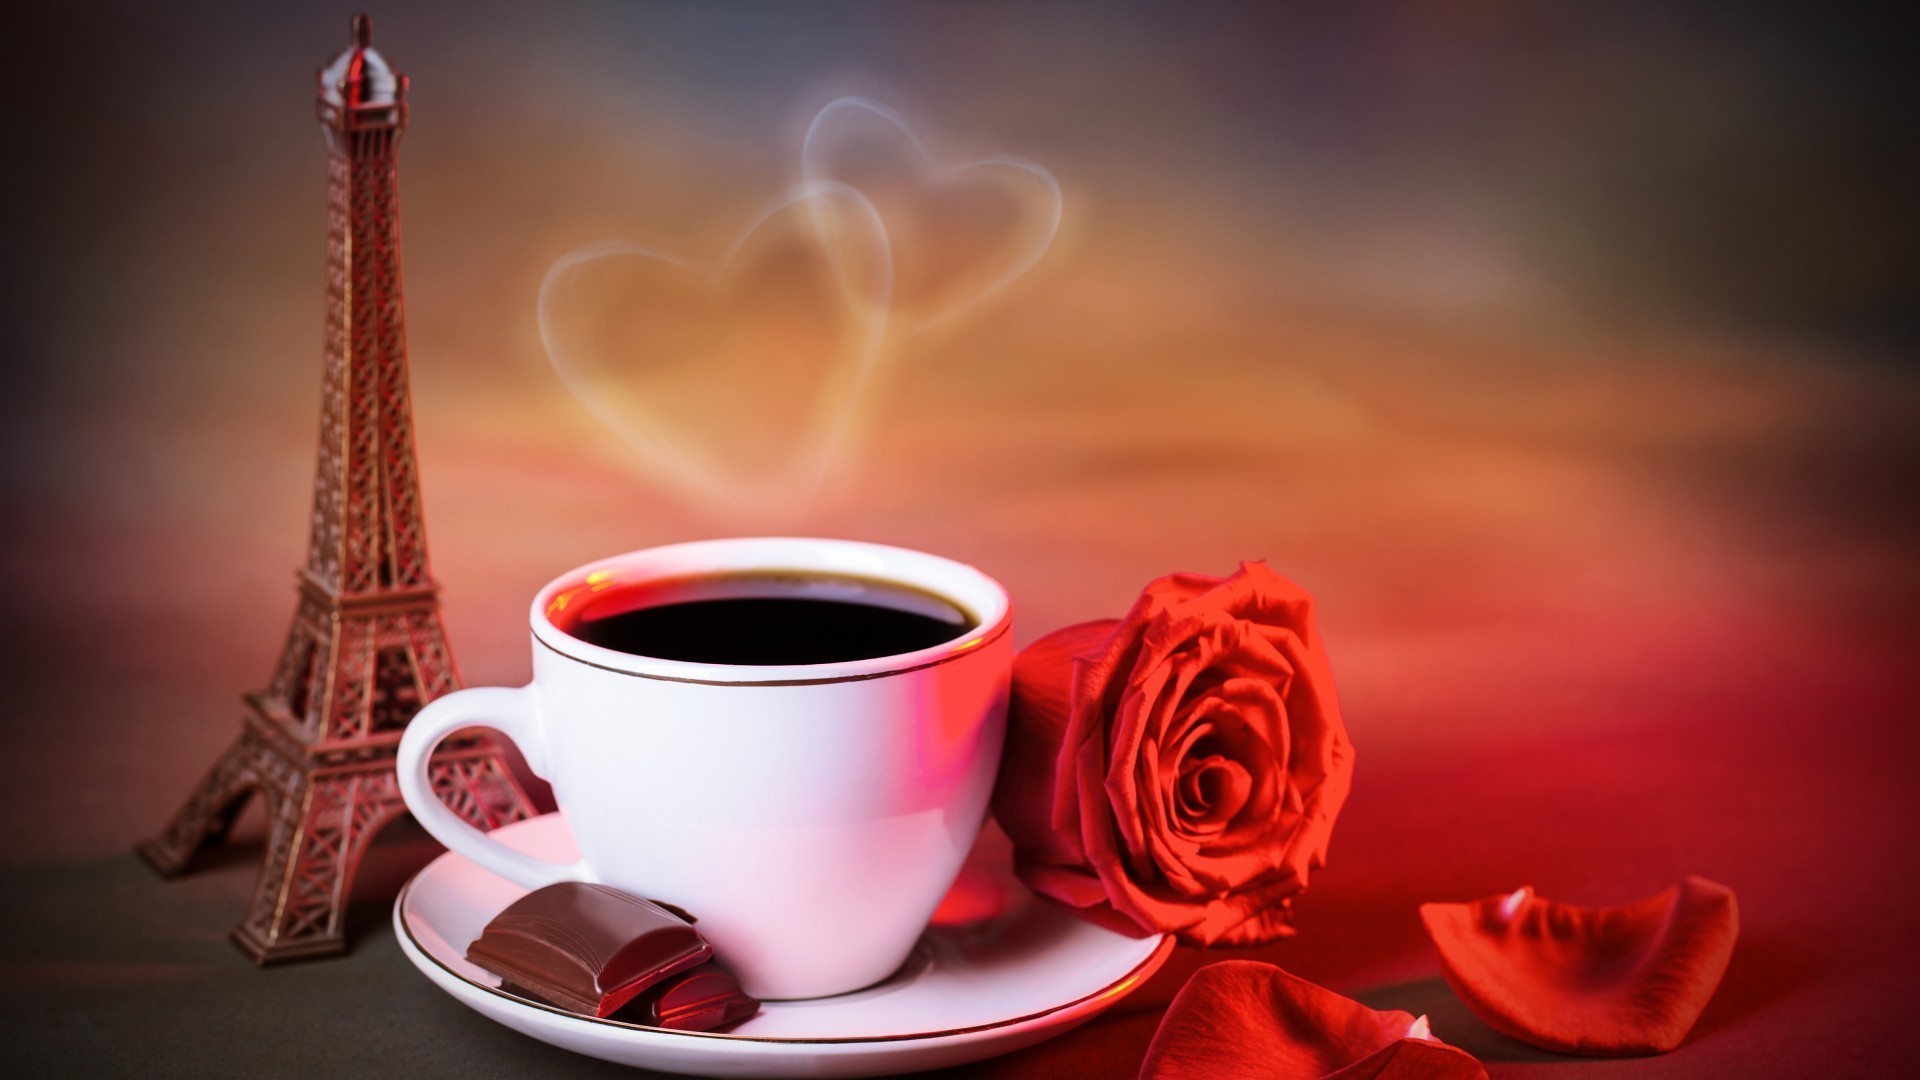 love and romance coffee dawn cup hot still life drink perfume breakfast food caffeine tea espresso flower